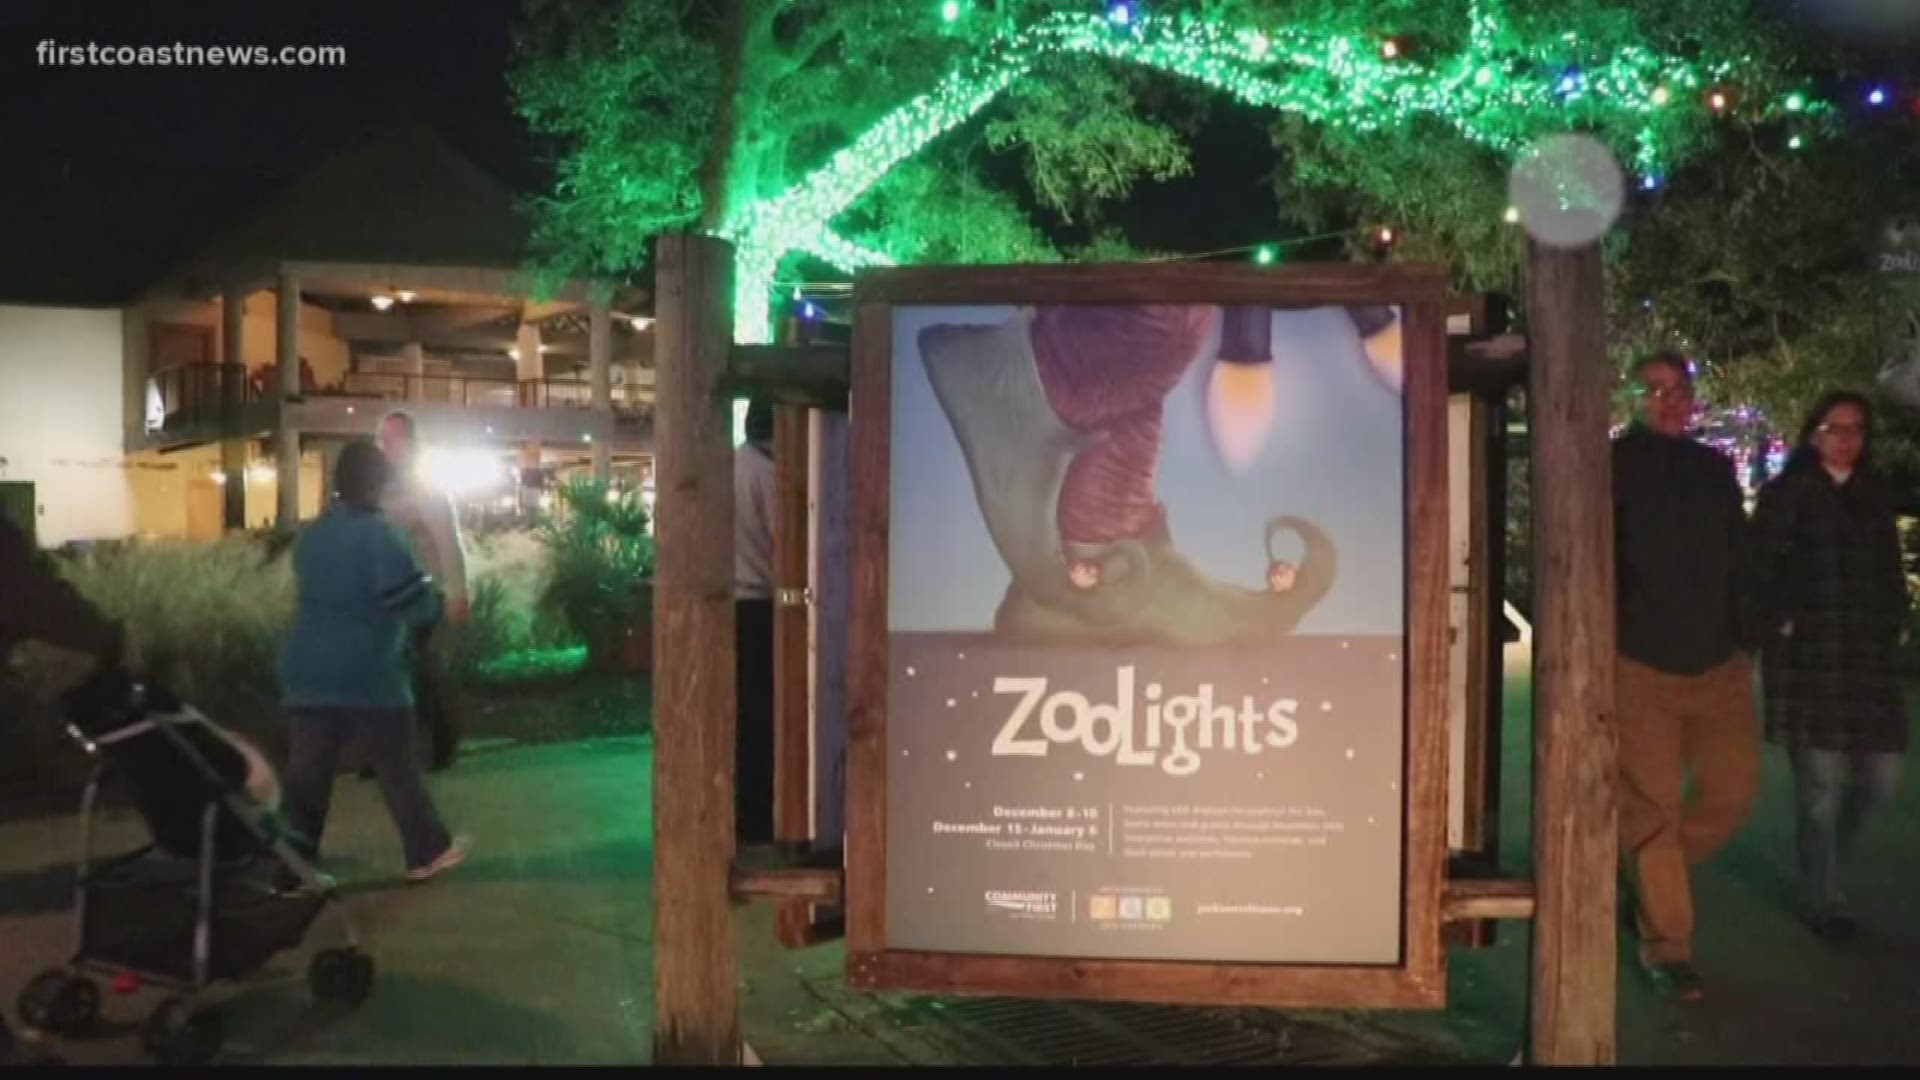 Fun lighting event returns to Jacksonville Zoo